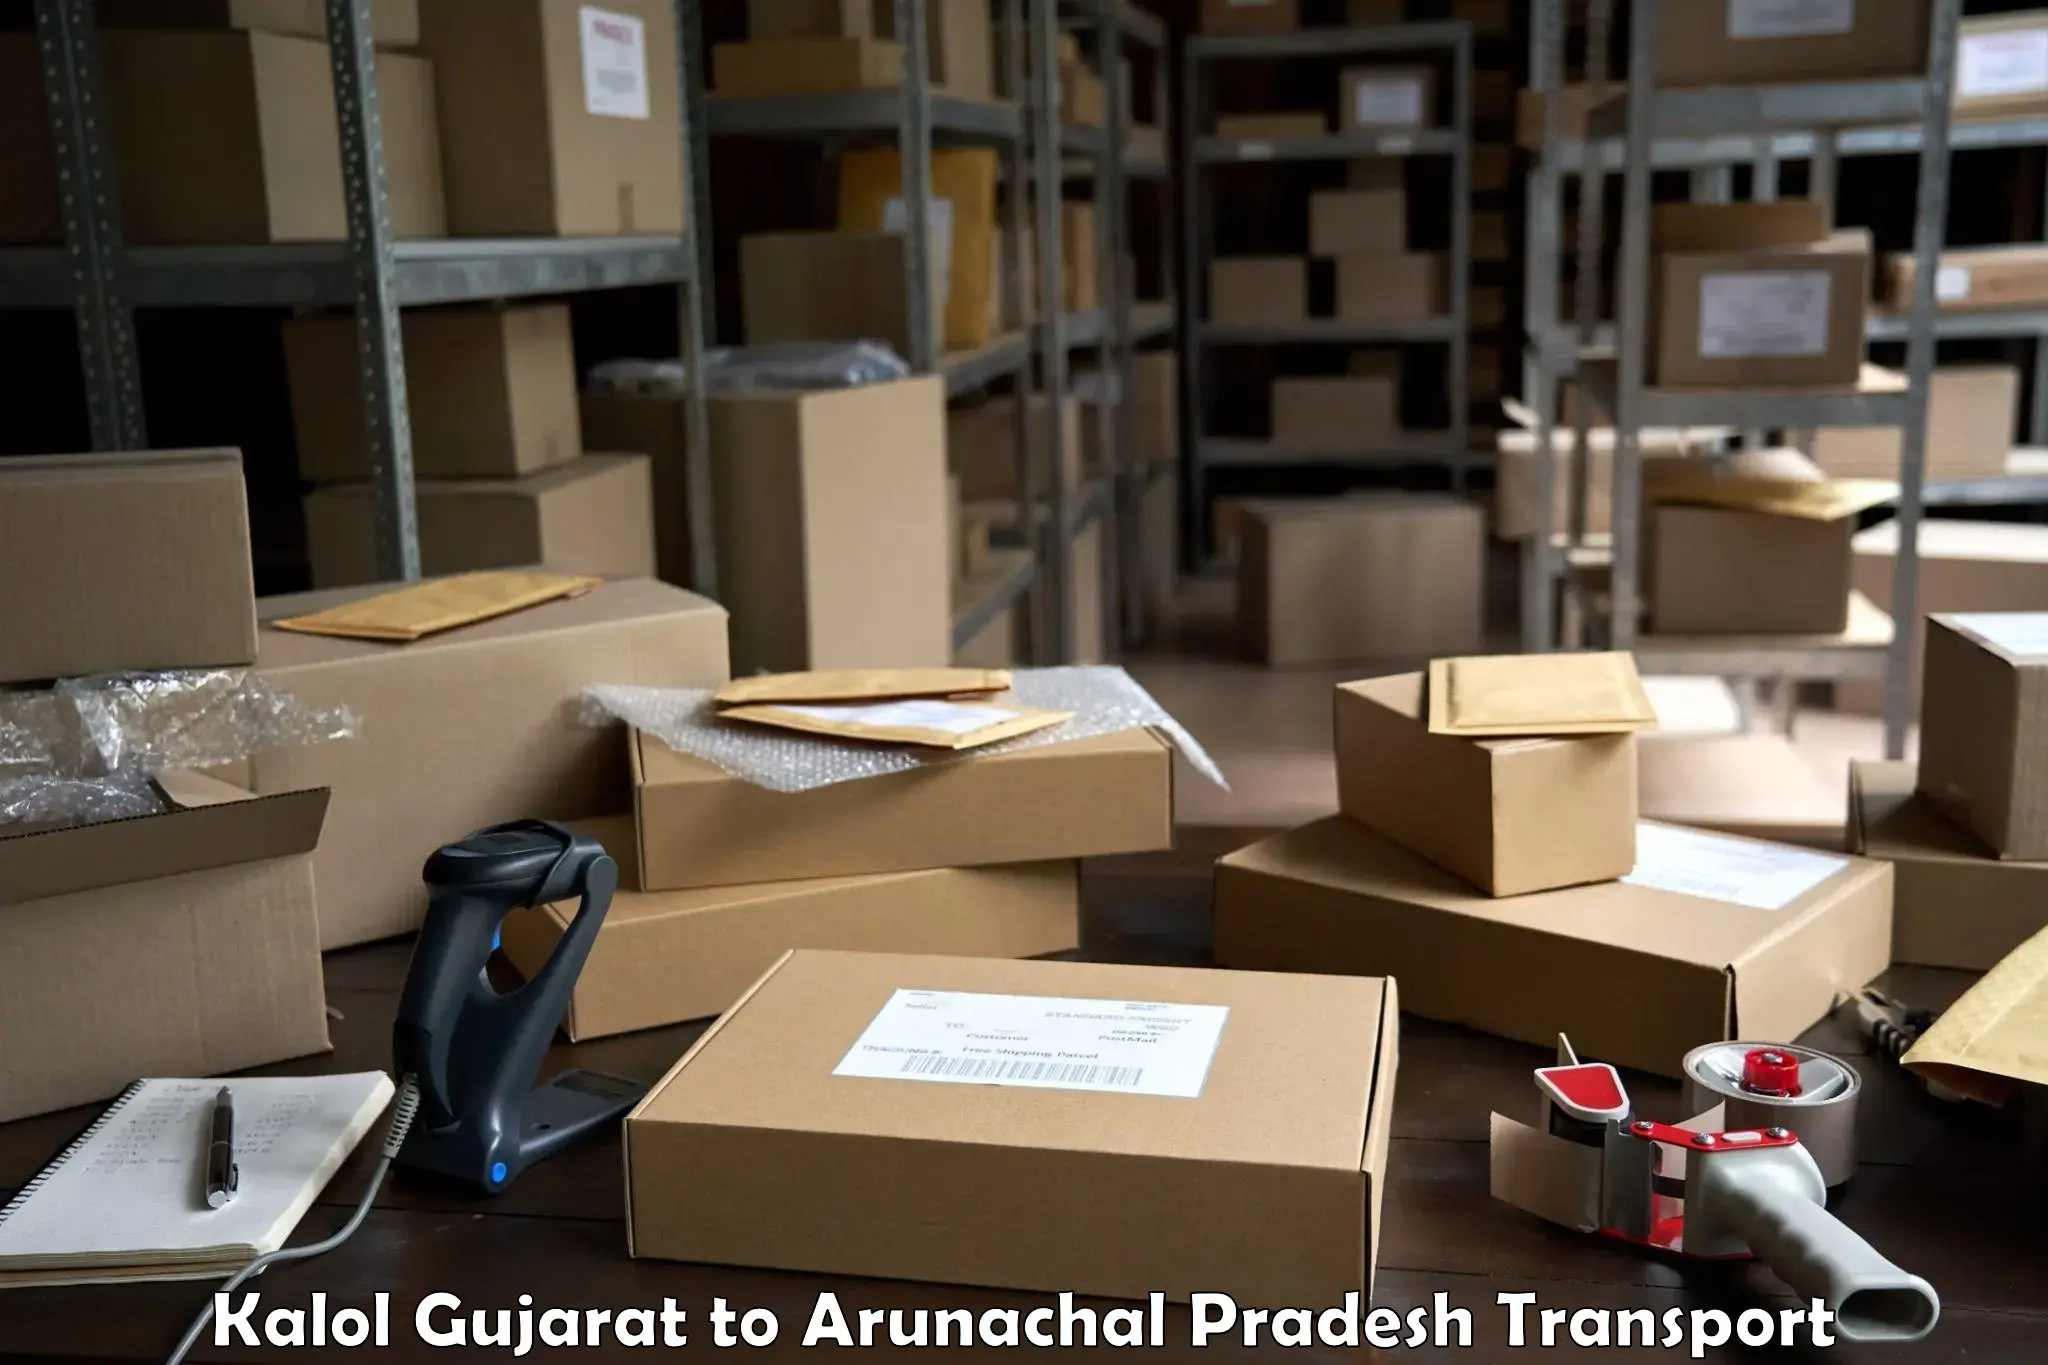 Daily parcel service transport Kalol Gujarat to Papum Pare